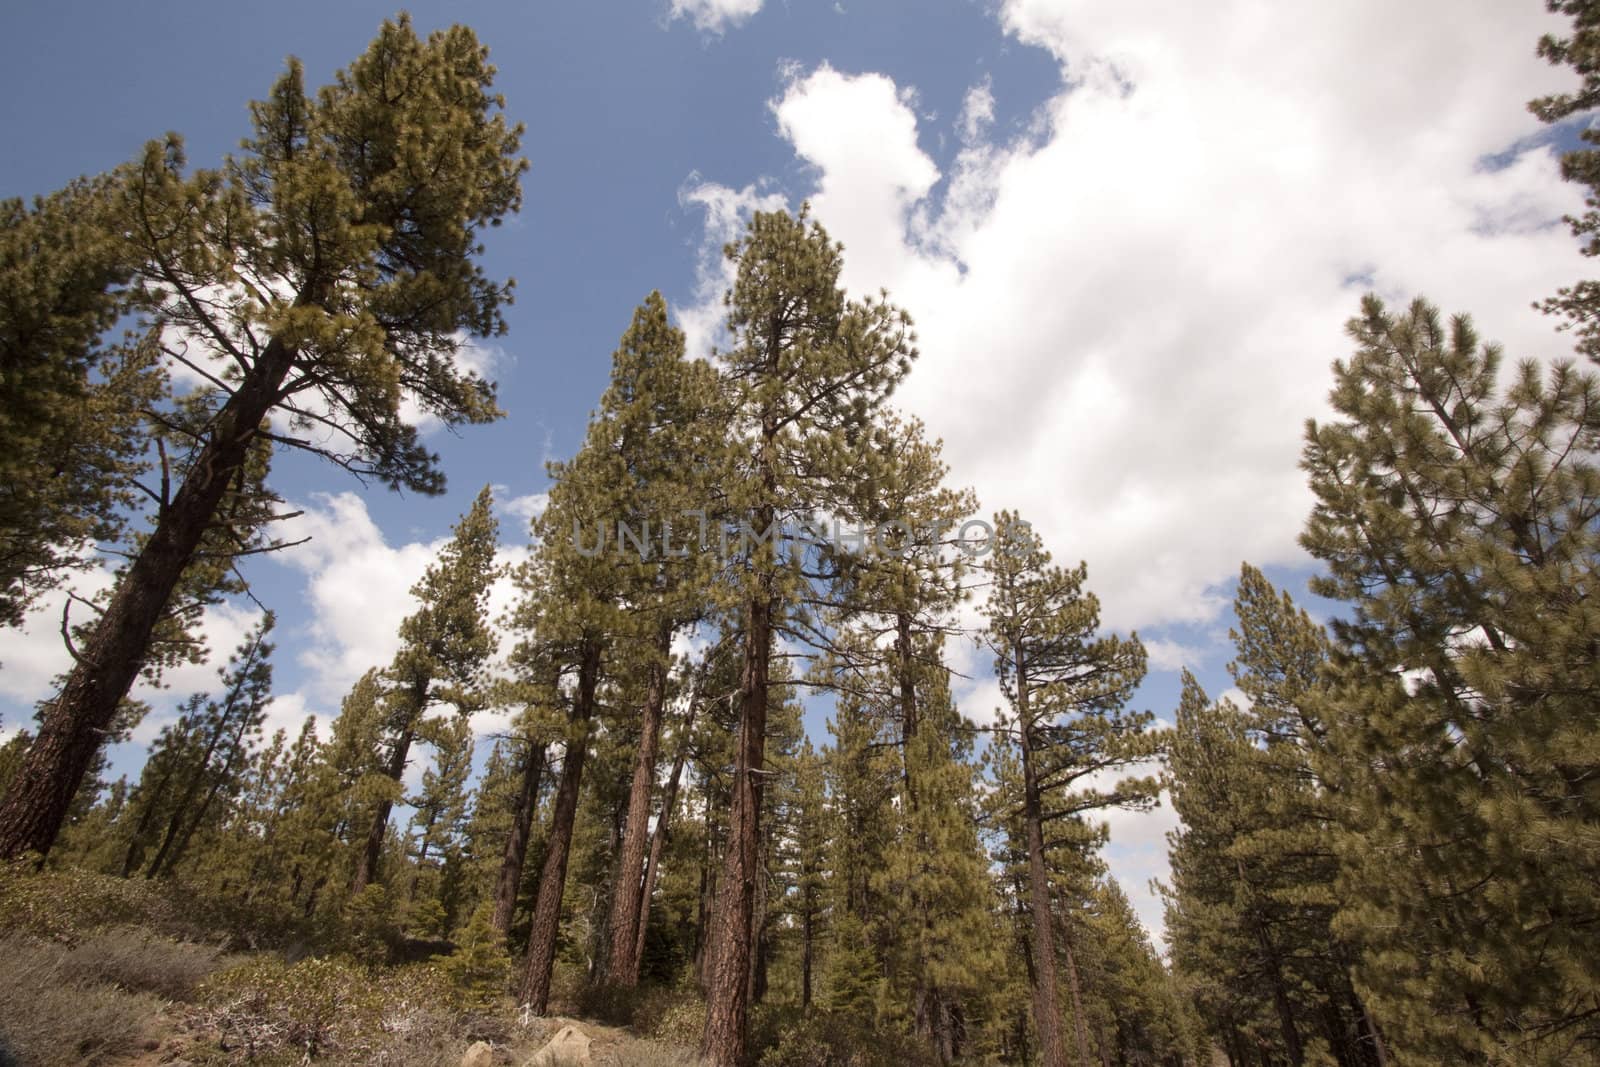 Pine tree forest in the Sierra Nevadas - Verdi Nevada by jeremywhat